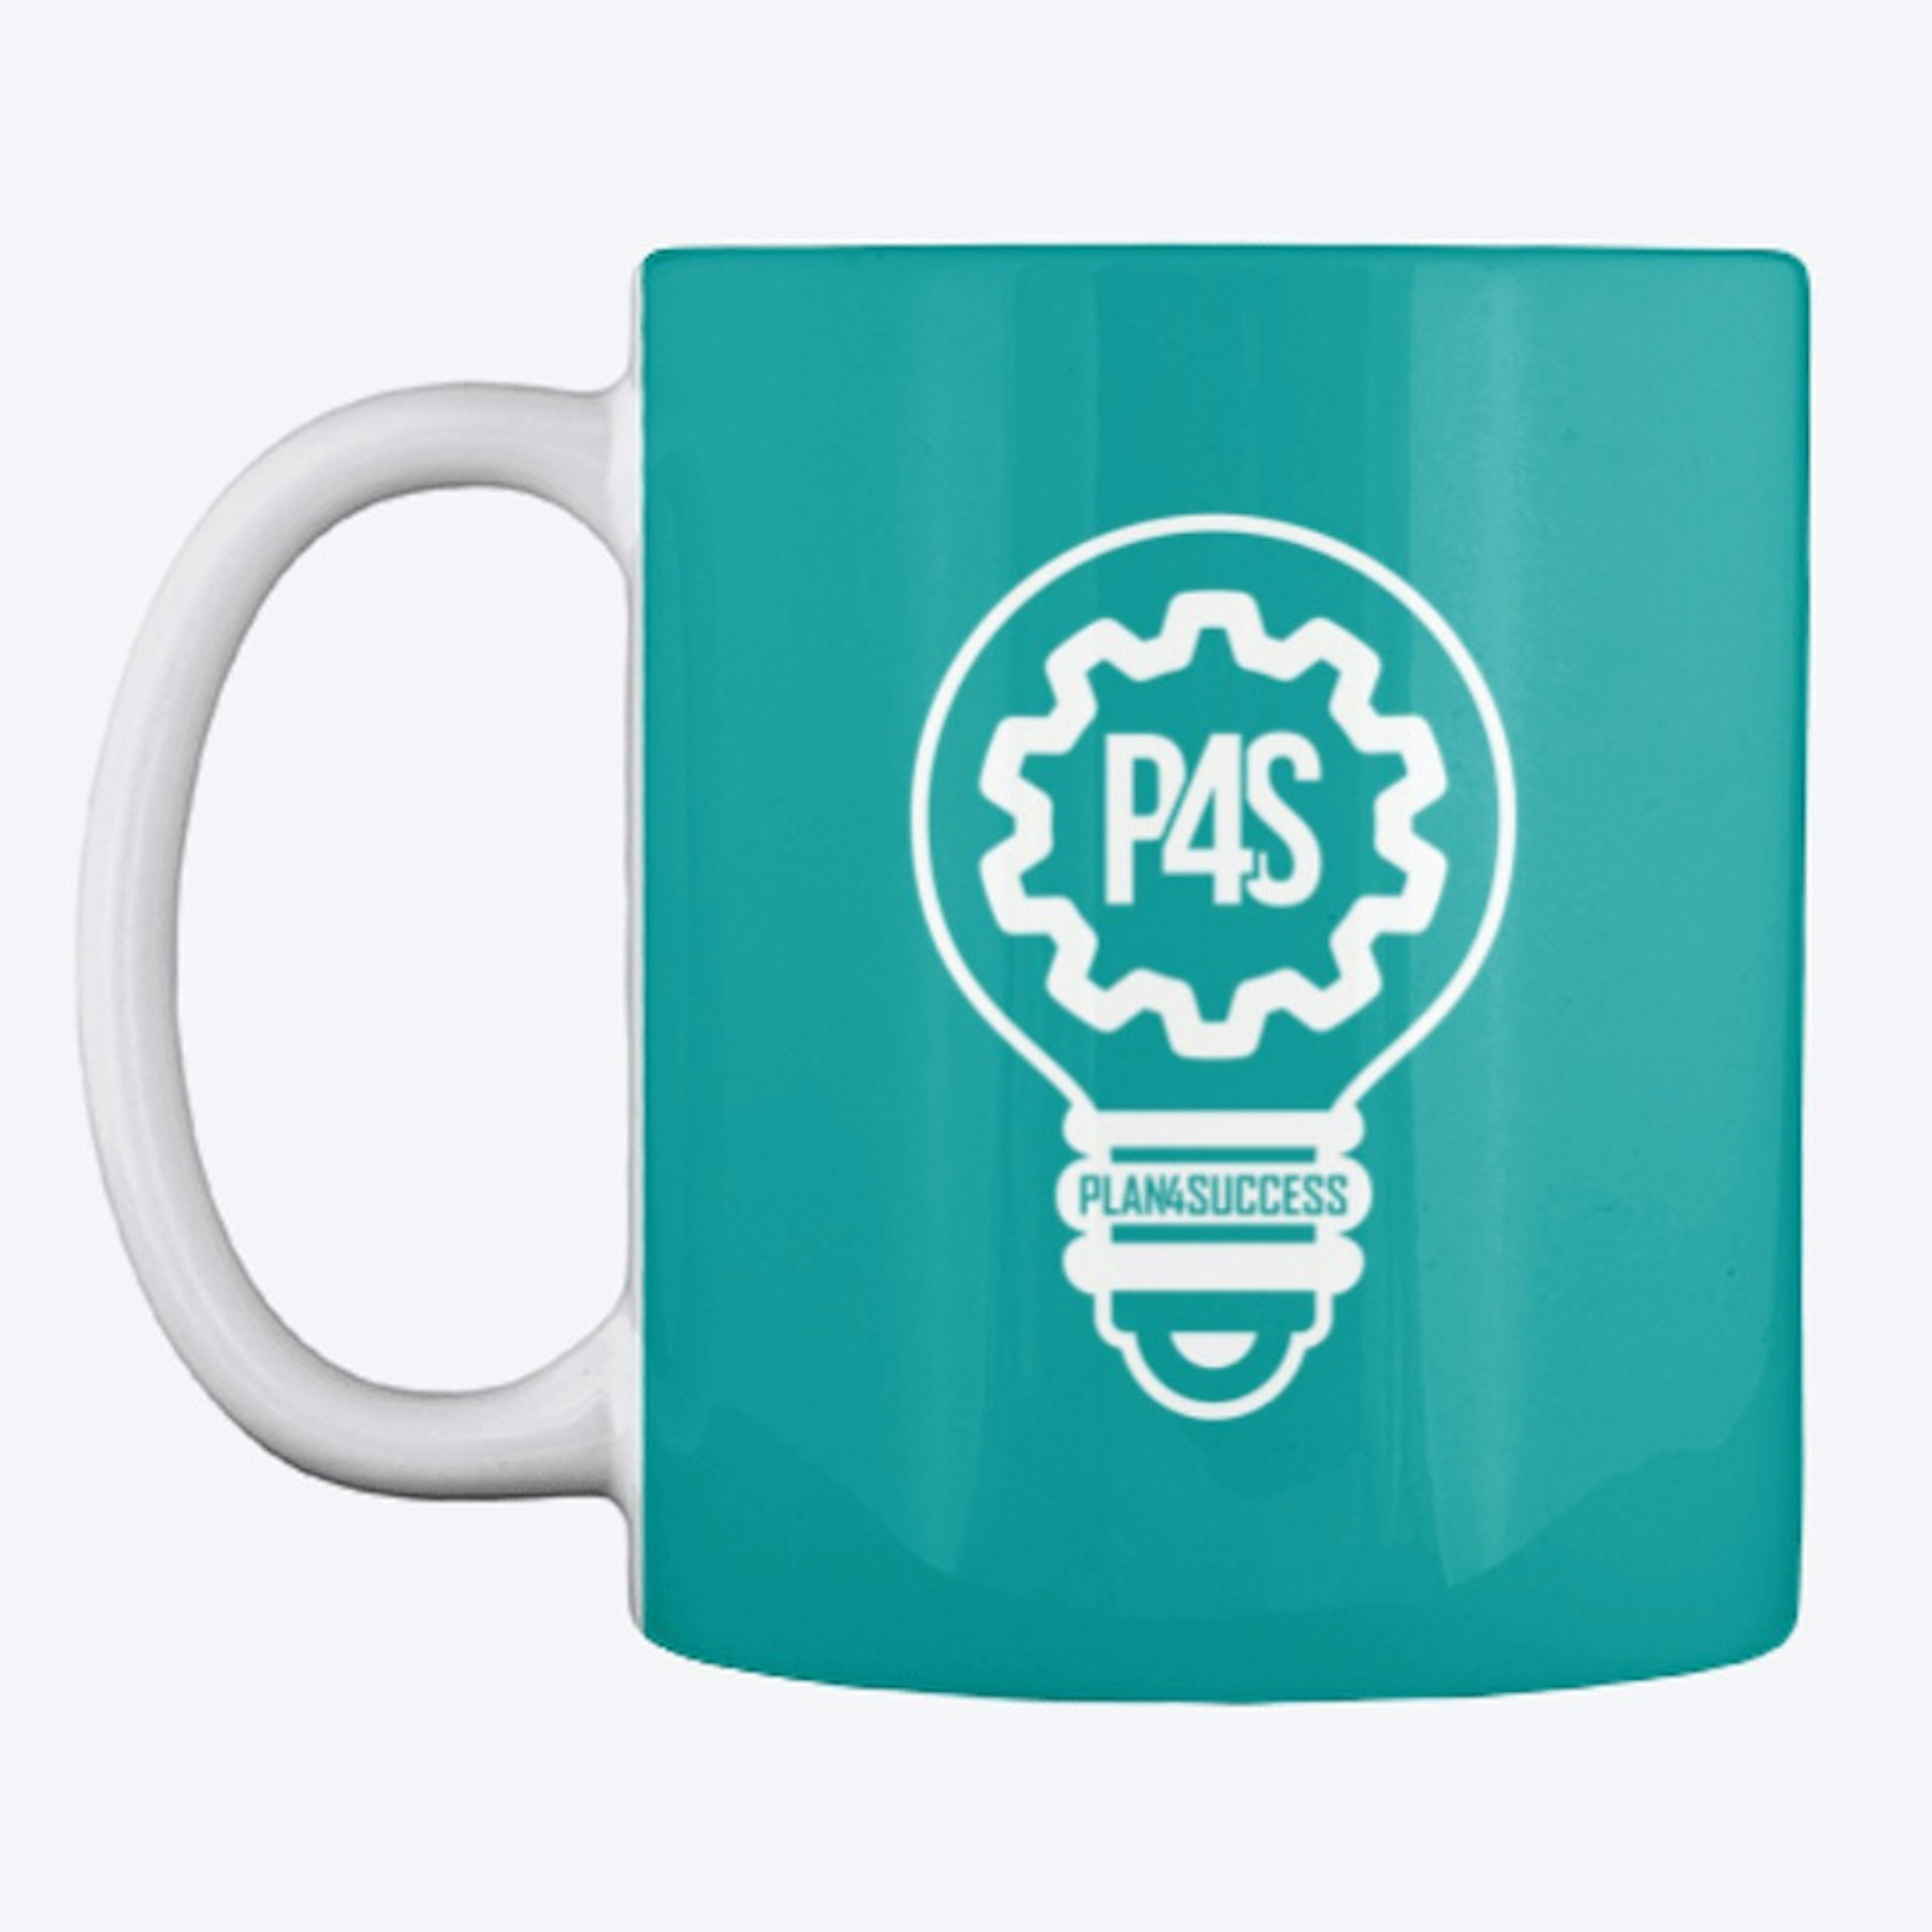 P4S Coffee Mug 2